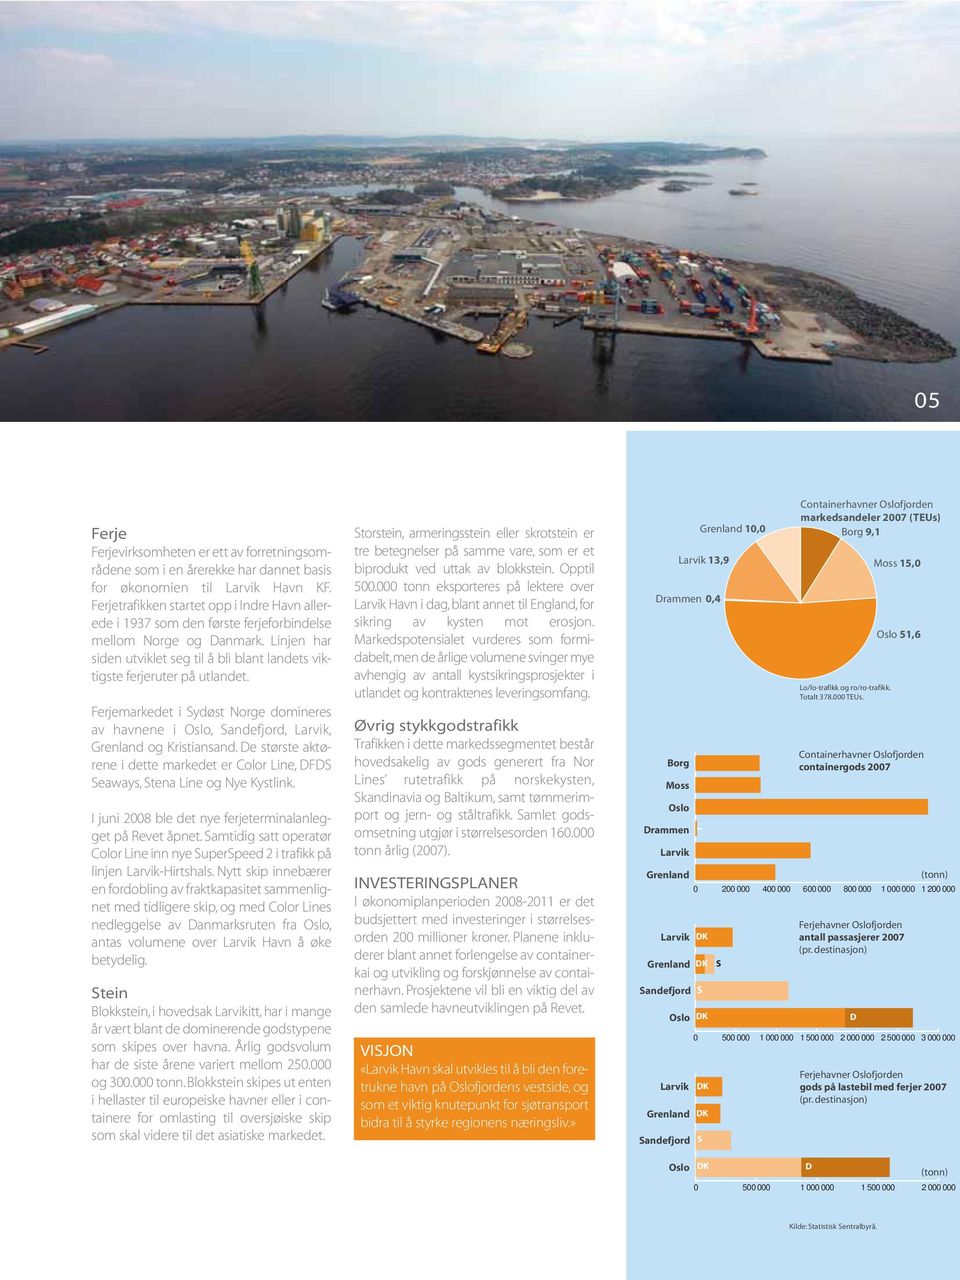 Ferjemarkedet i Sydøst Norge domineres av havnene i Oslo, Sandefjord, Larvik, Grenland og Kristiansand. De største aktørene i dette markedet er Color Line, DFDS Seaways, Stena Line og Nye Kystlink.